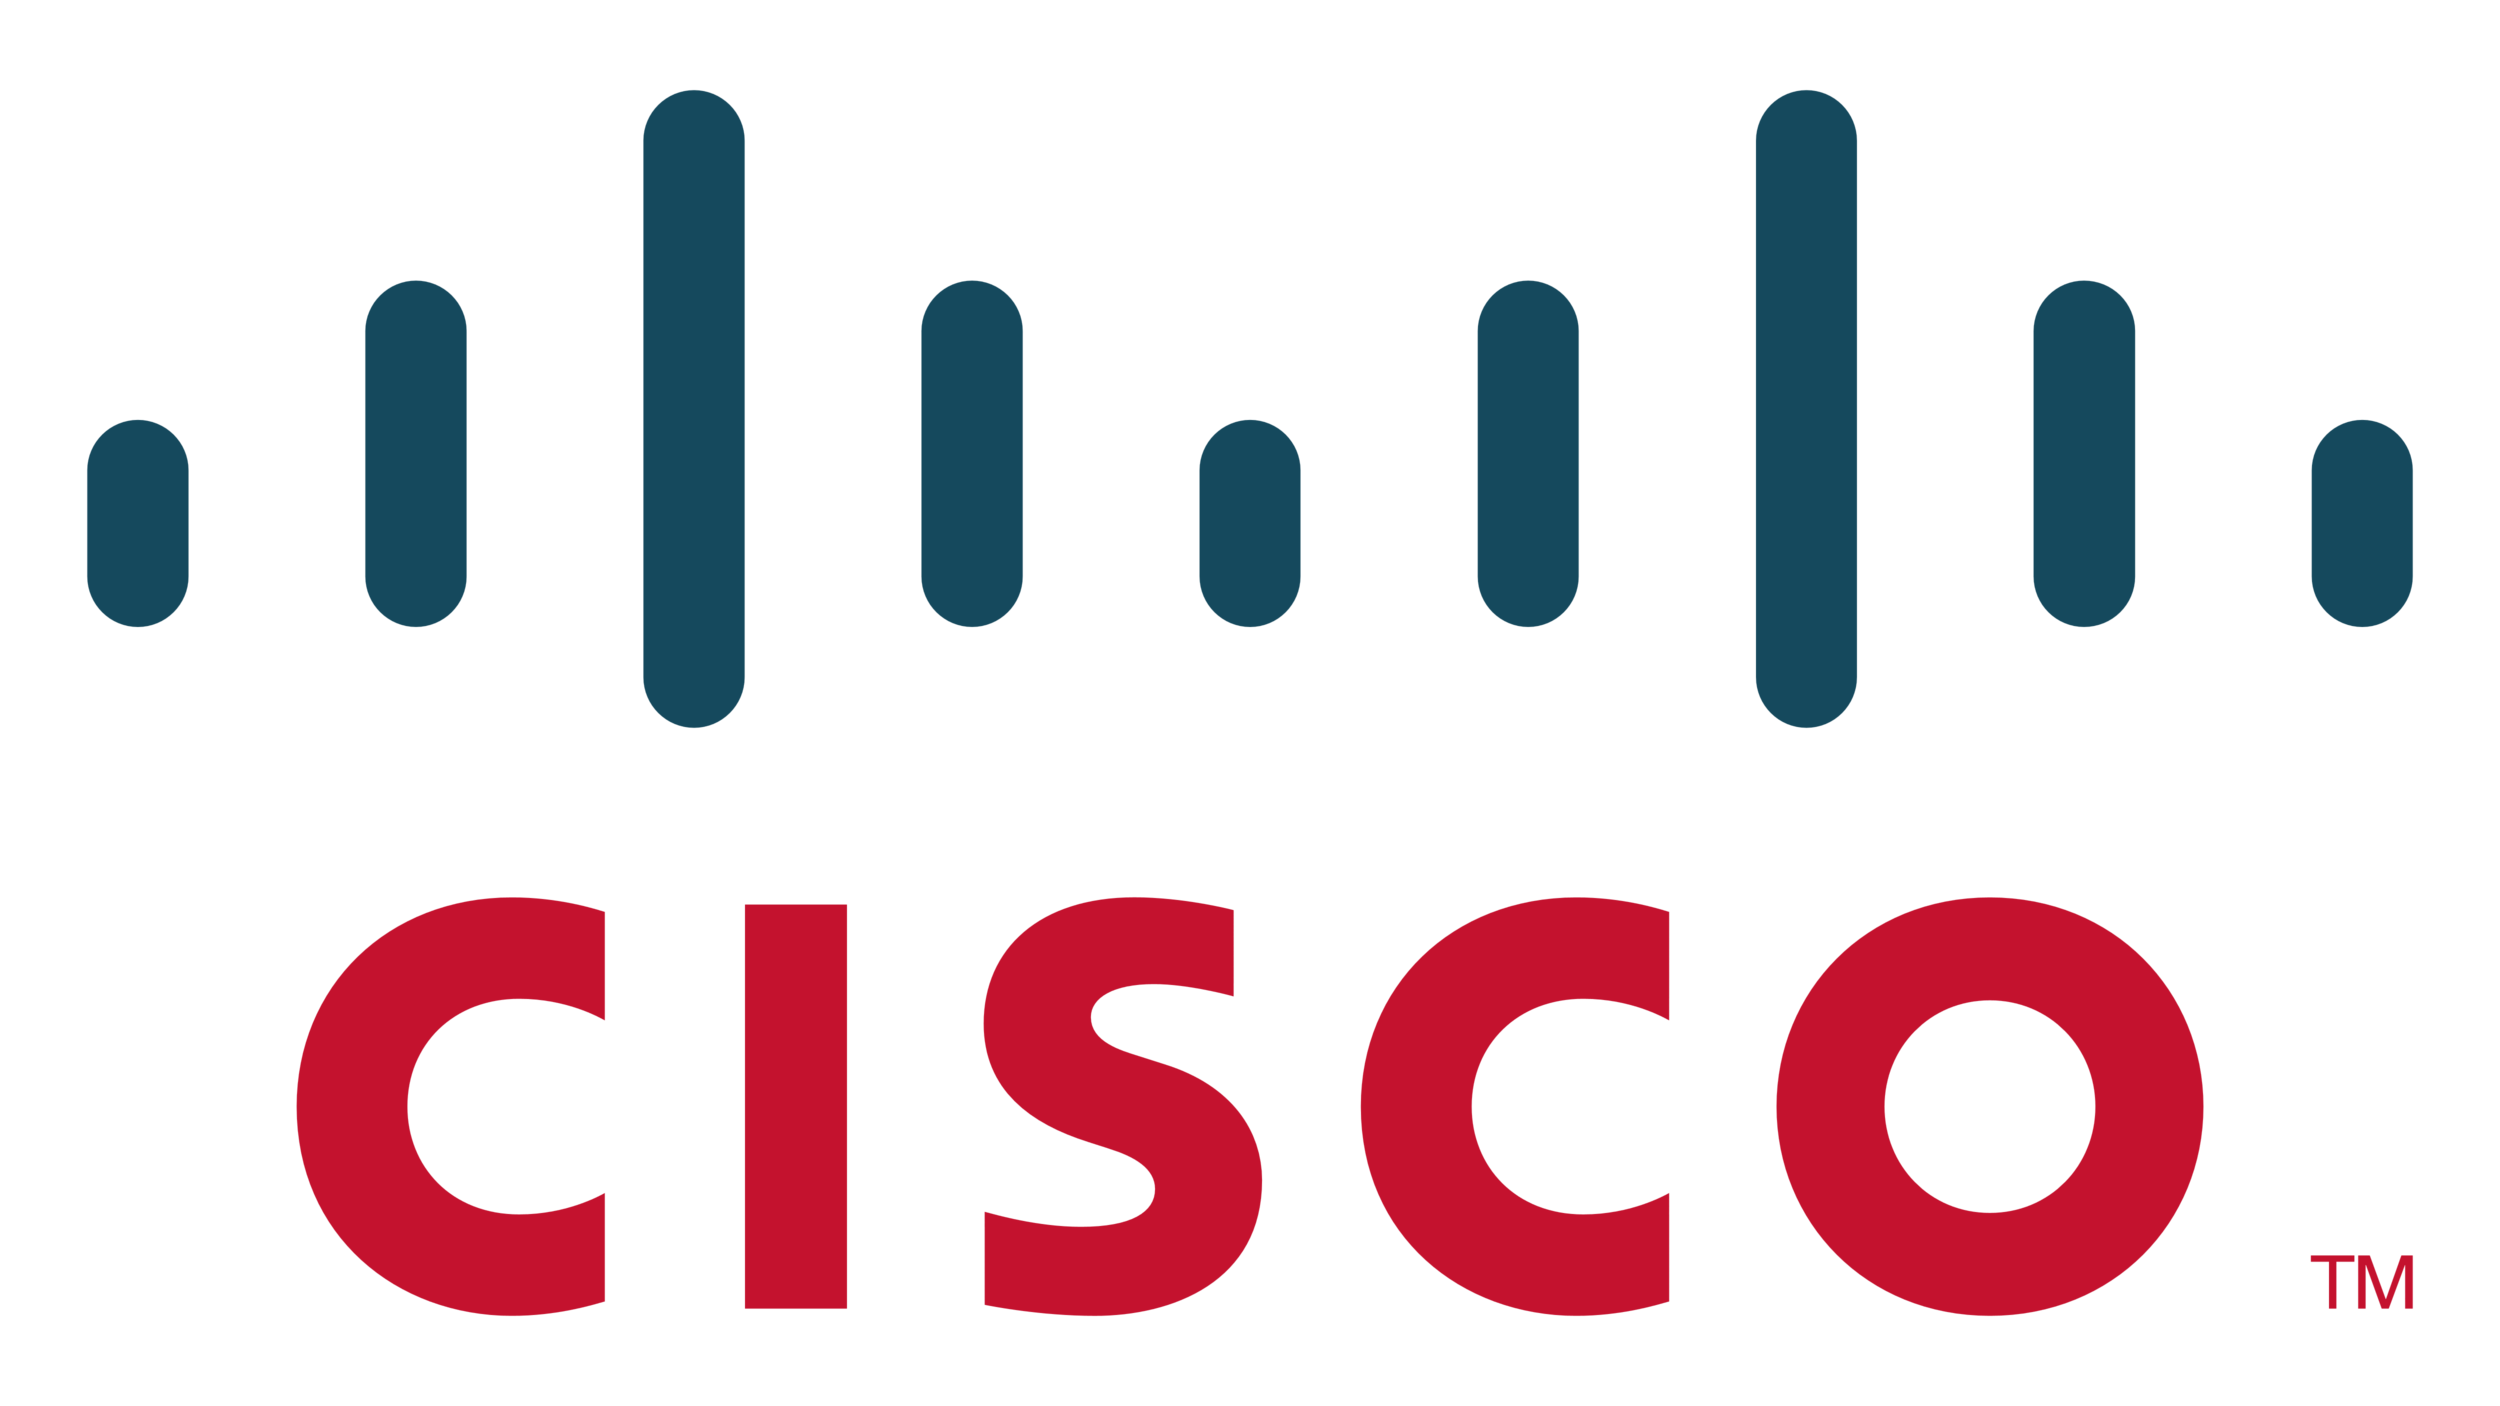 Cisco_logo_emblem_logotype.png